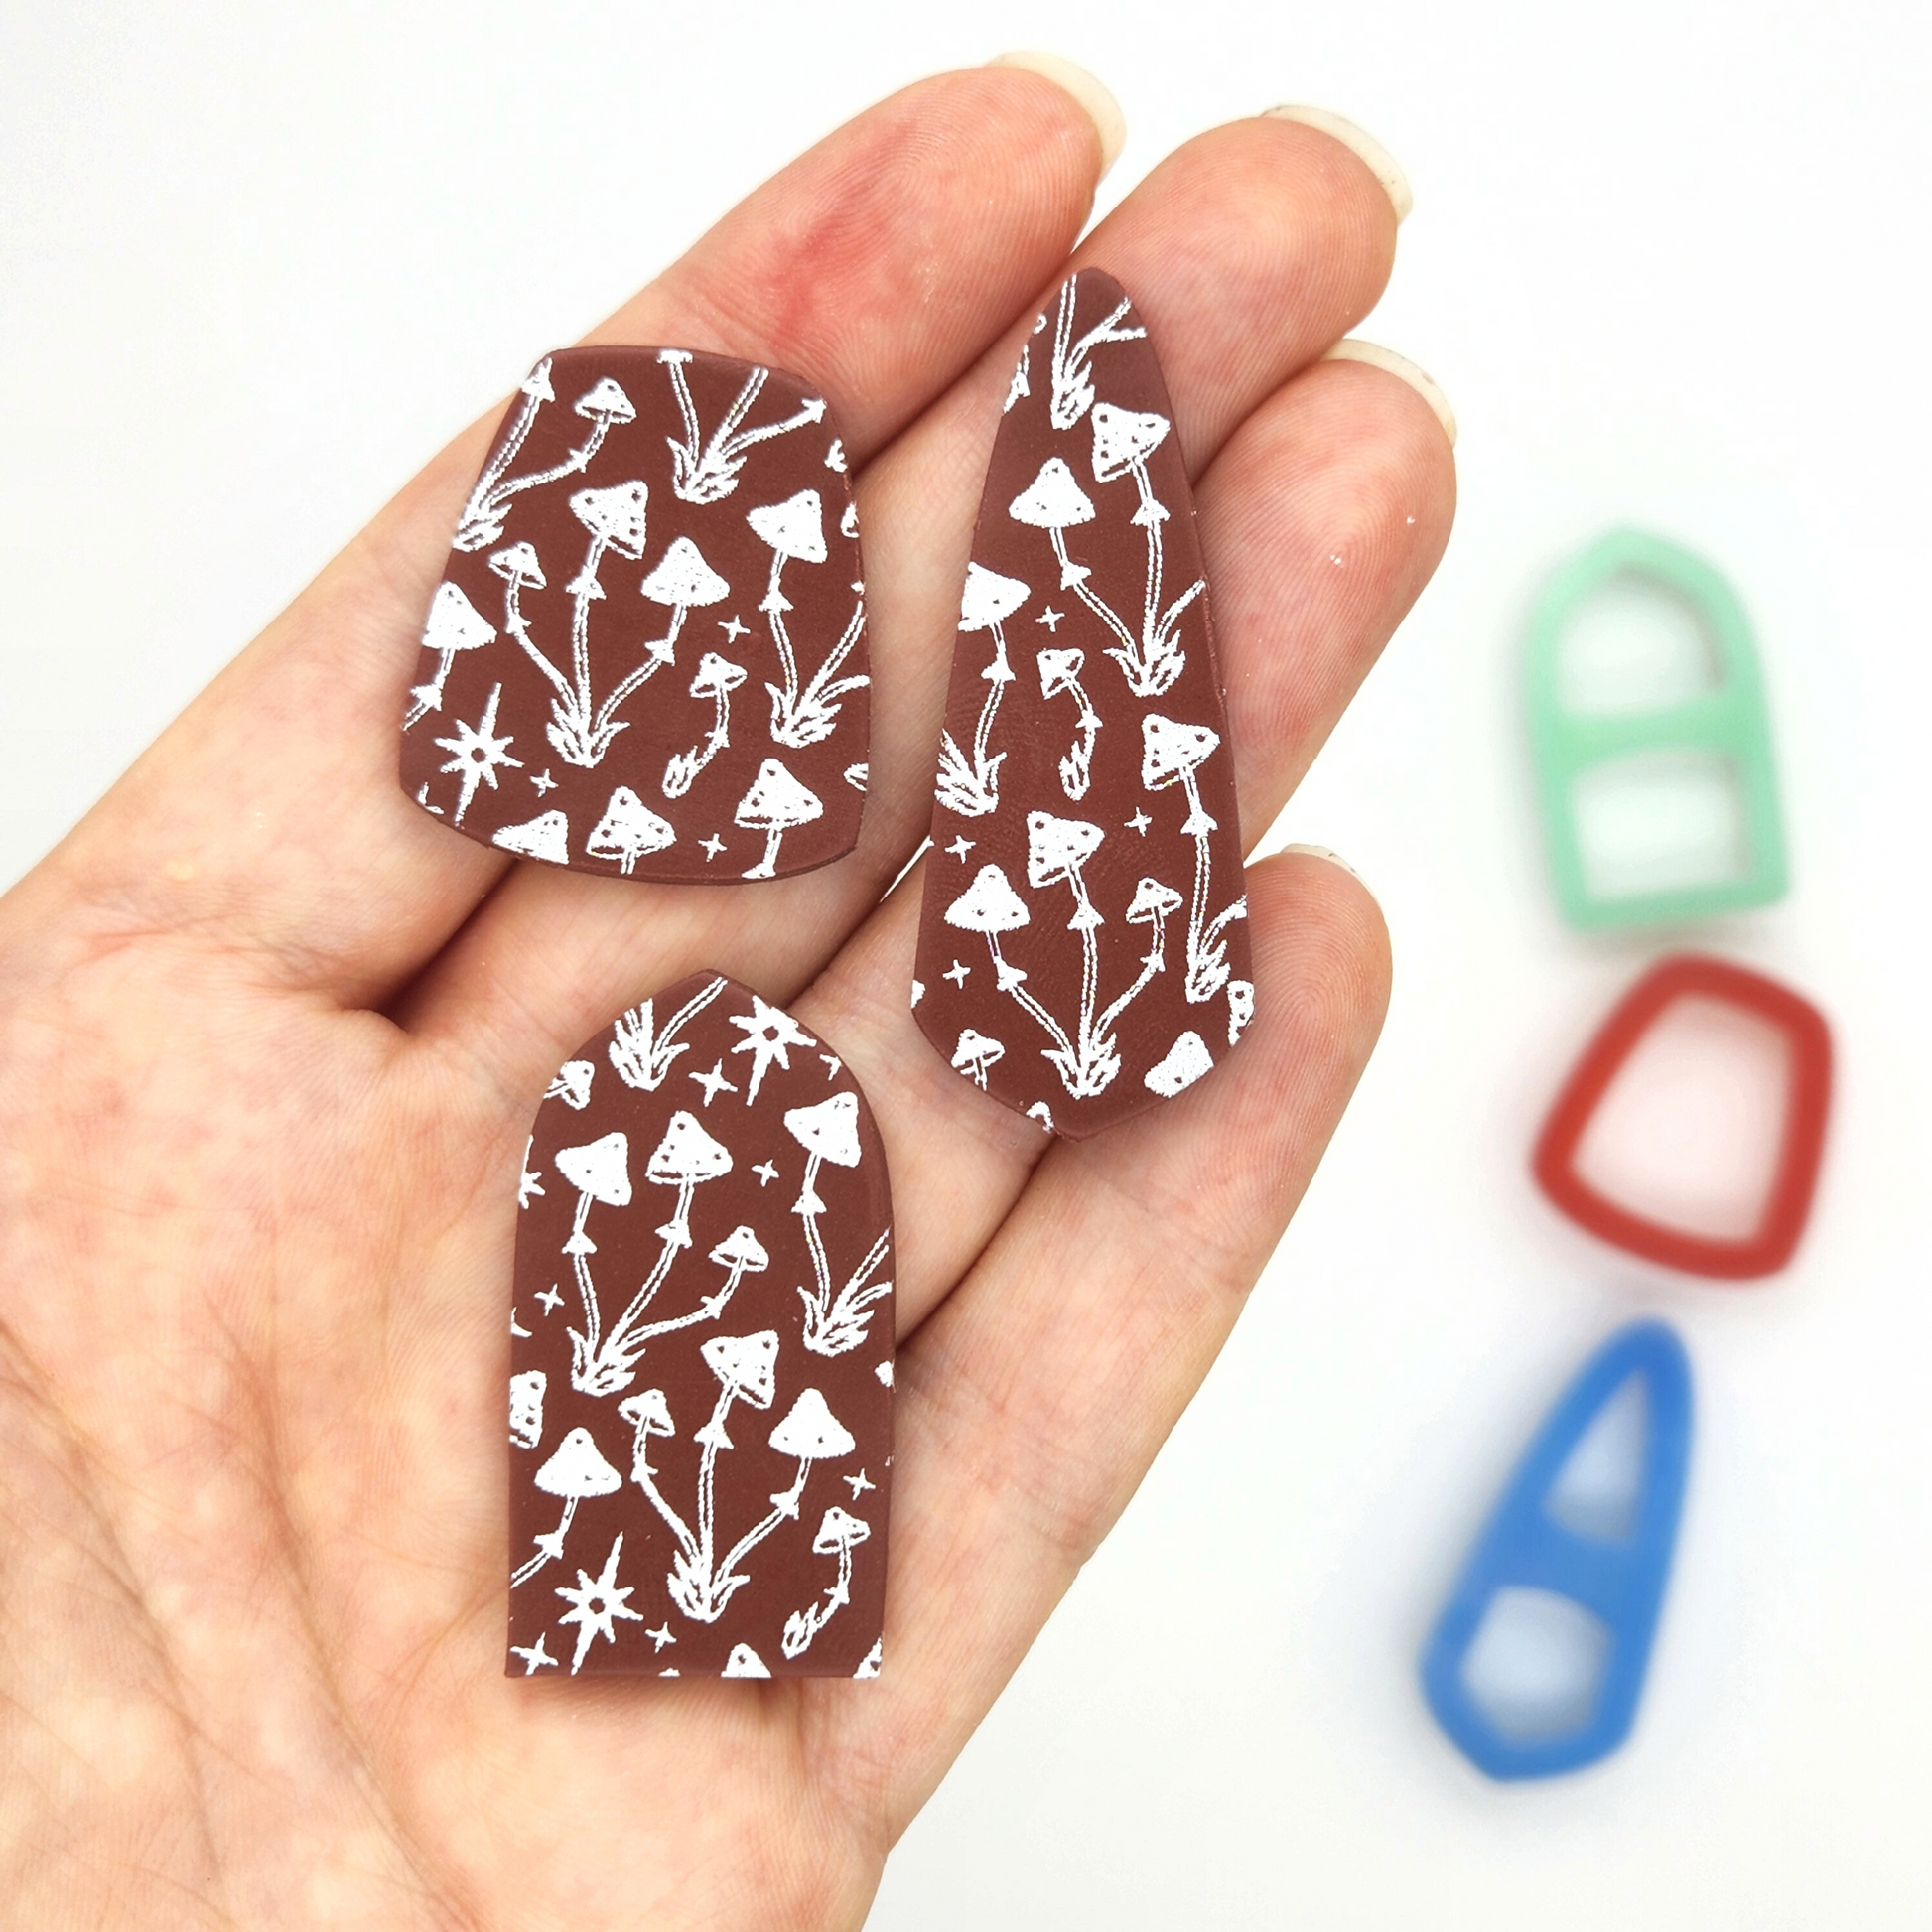 Actual Magick Mushrooms Silk Screen Design on Polymer Clay Shapes Sample